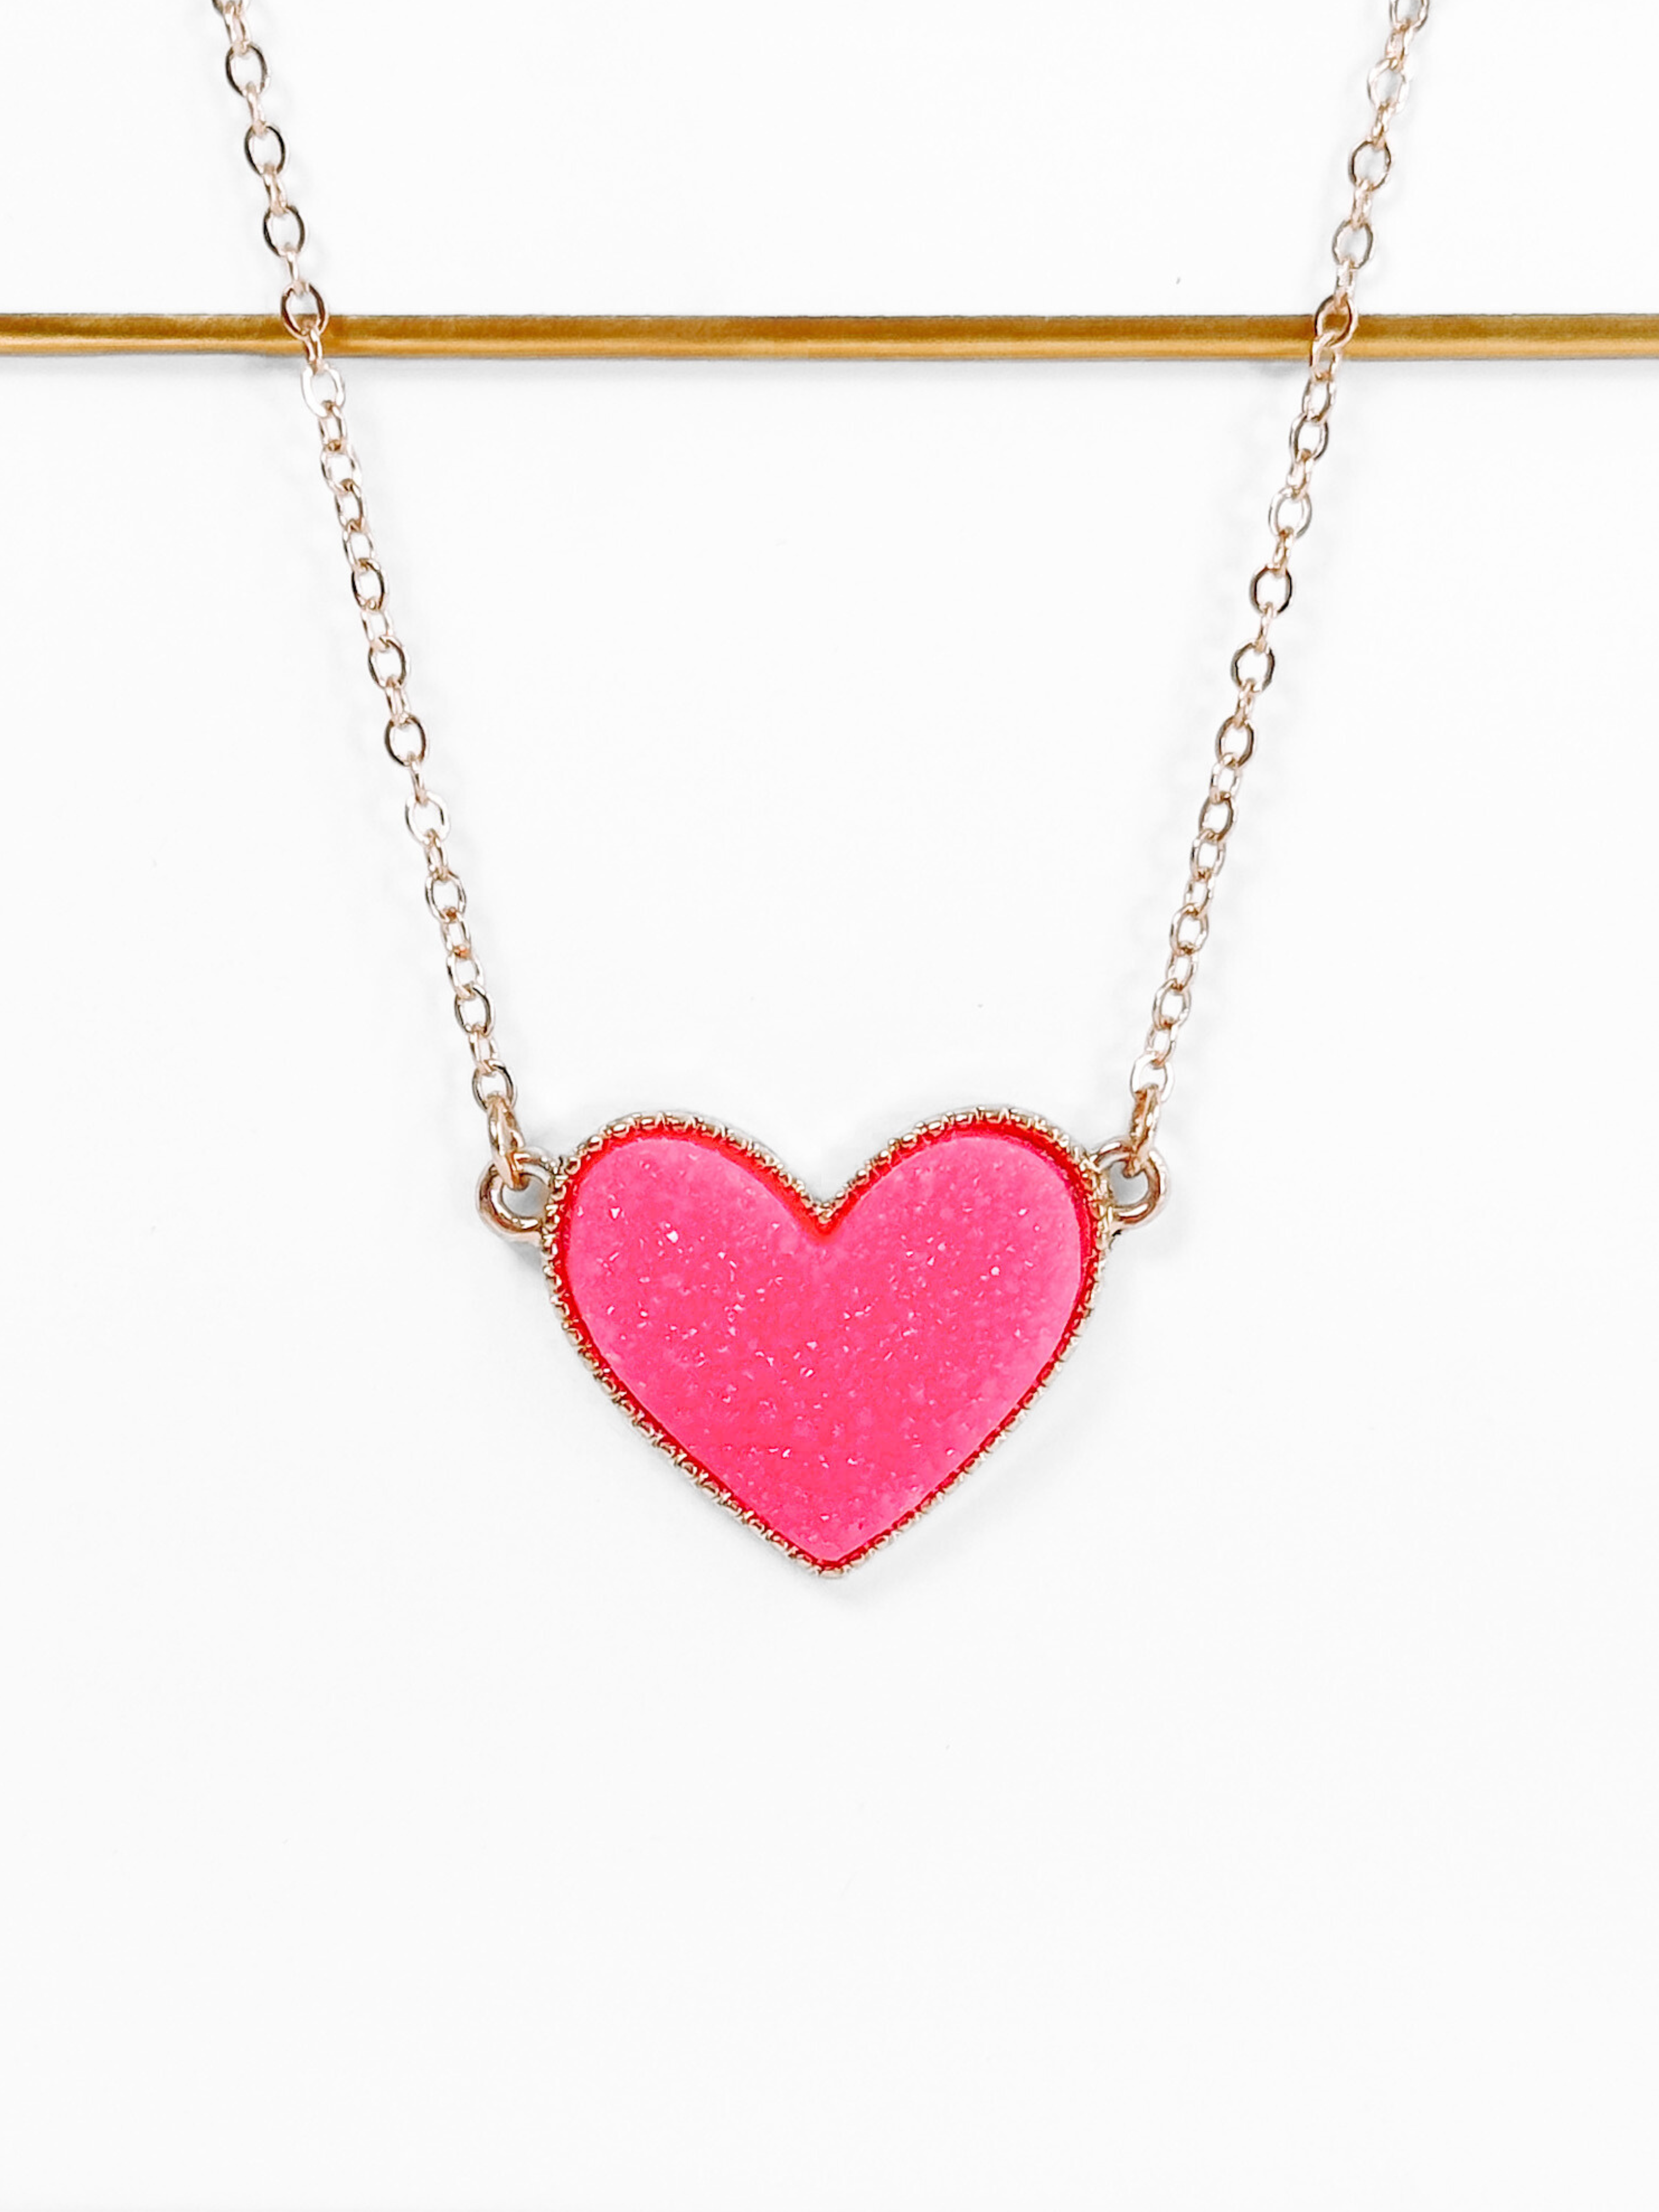 Big Pink Love Heart Necklace | Sassy Shortcake | sassyshortcake.com